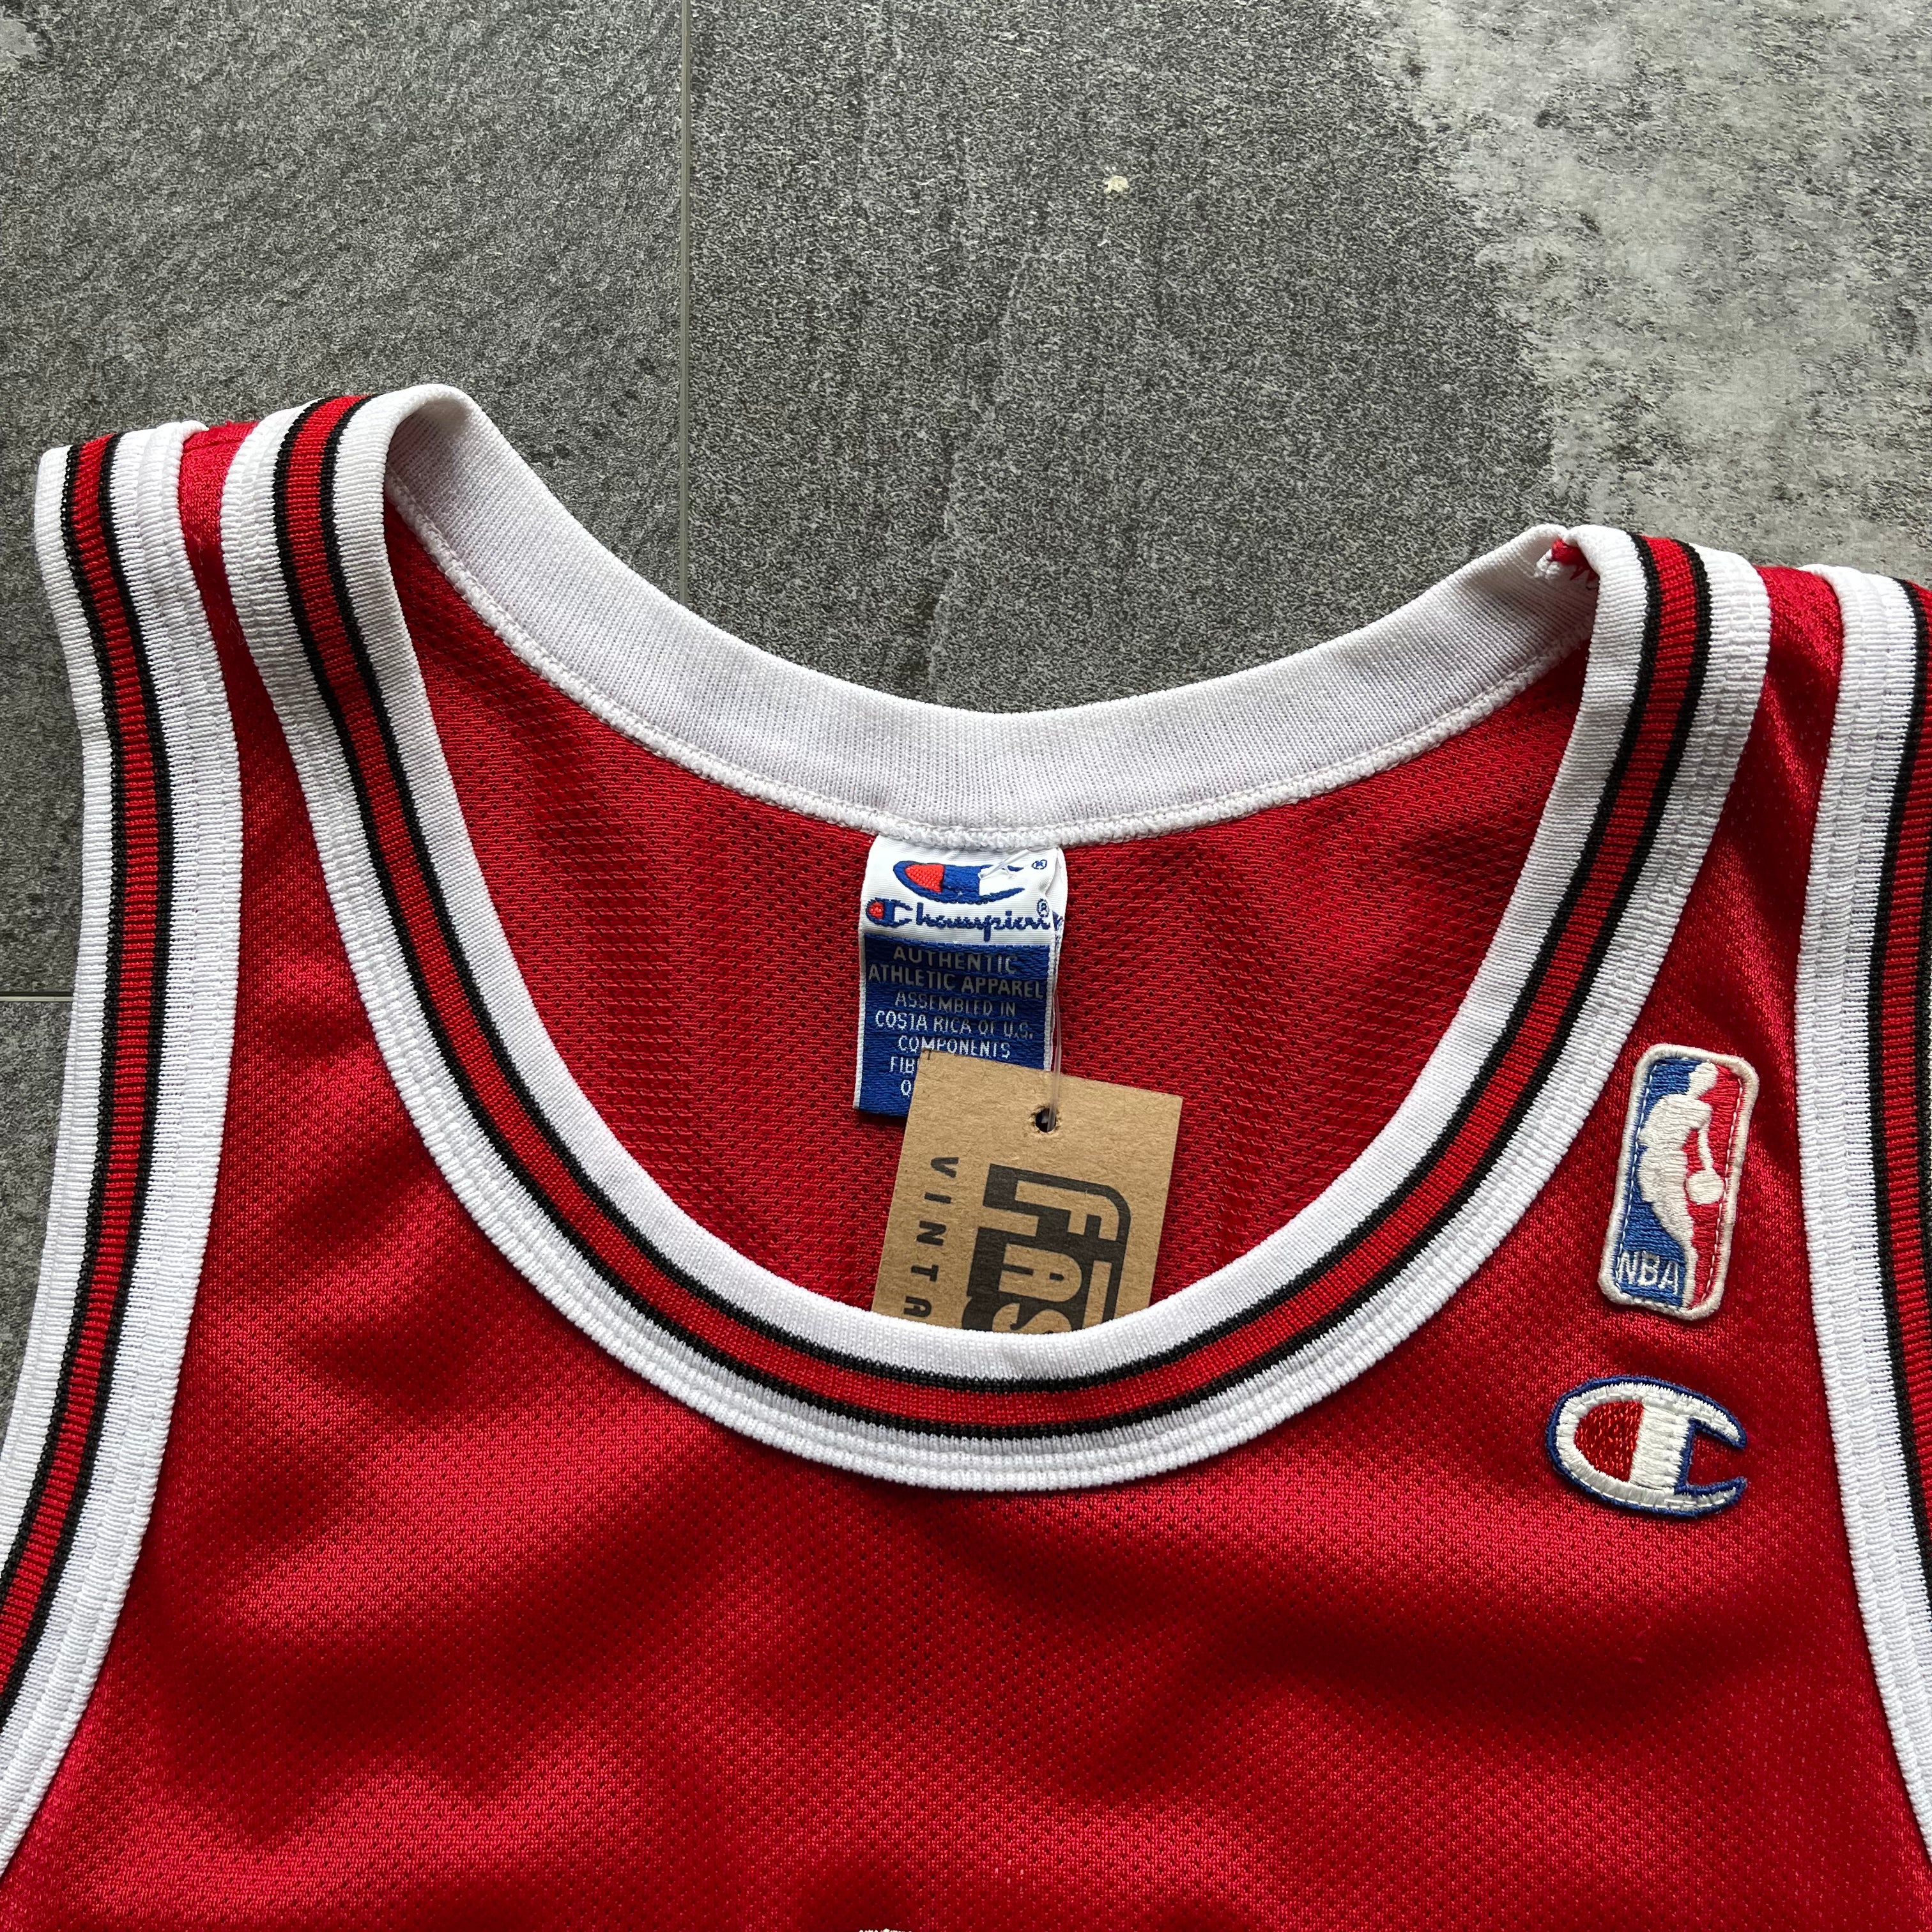 Vintage NBA Jordan Chicago Bulls jersey  Size-L